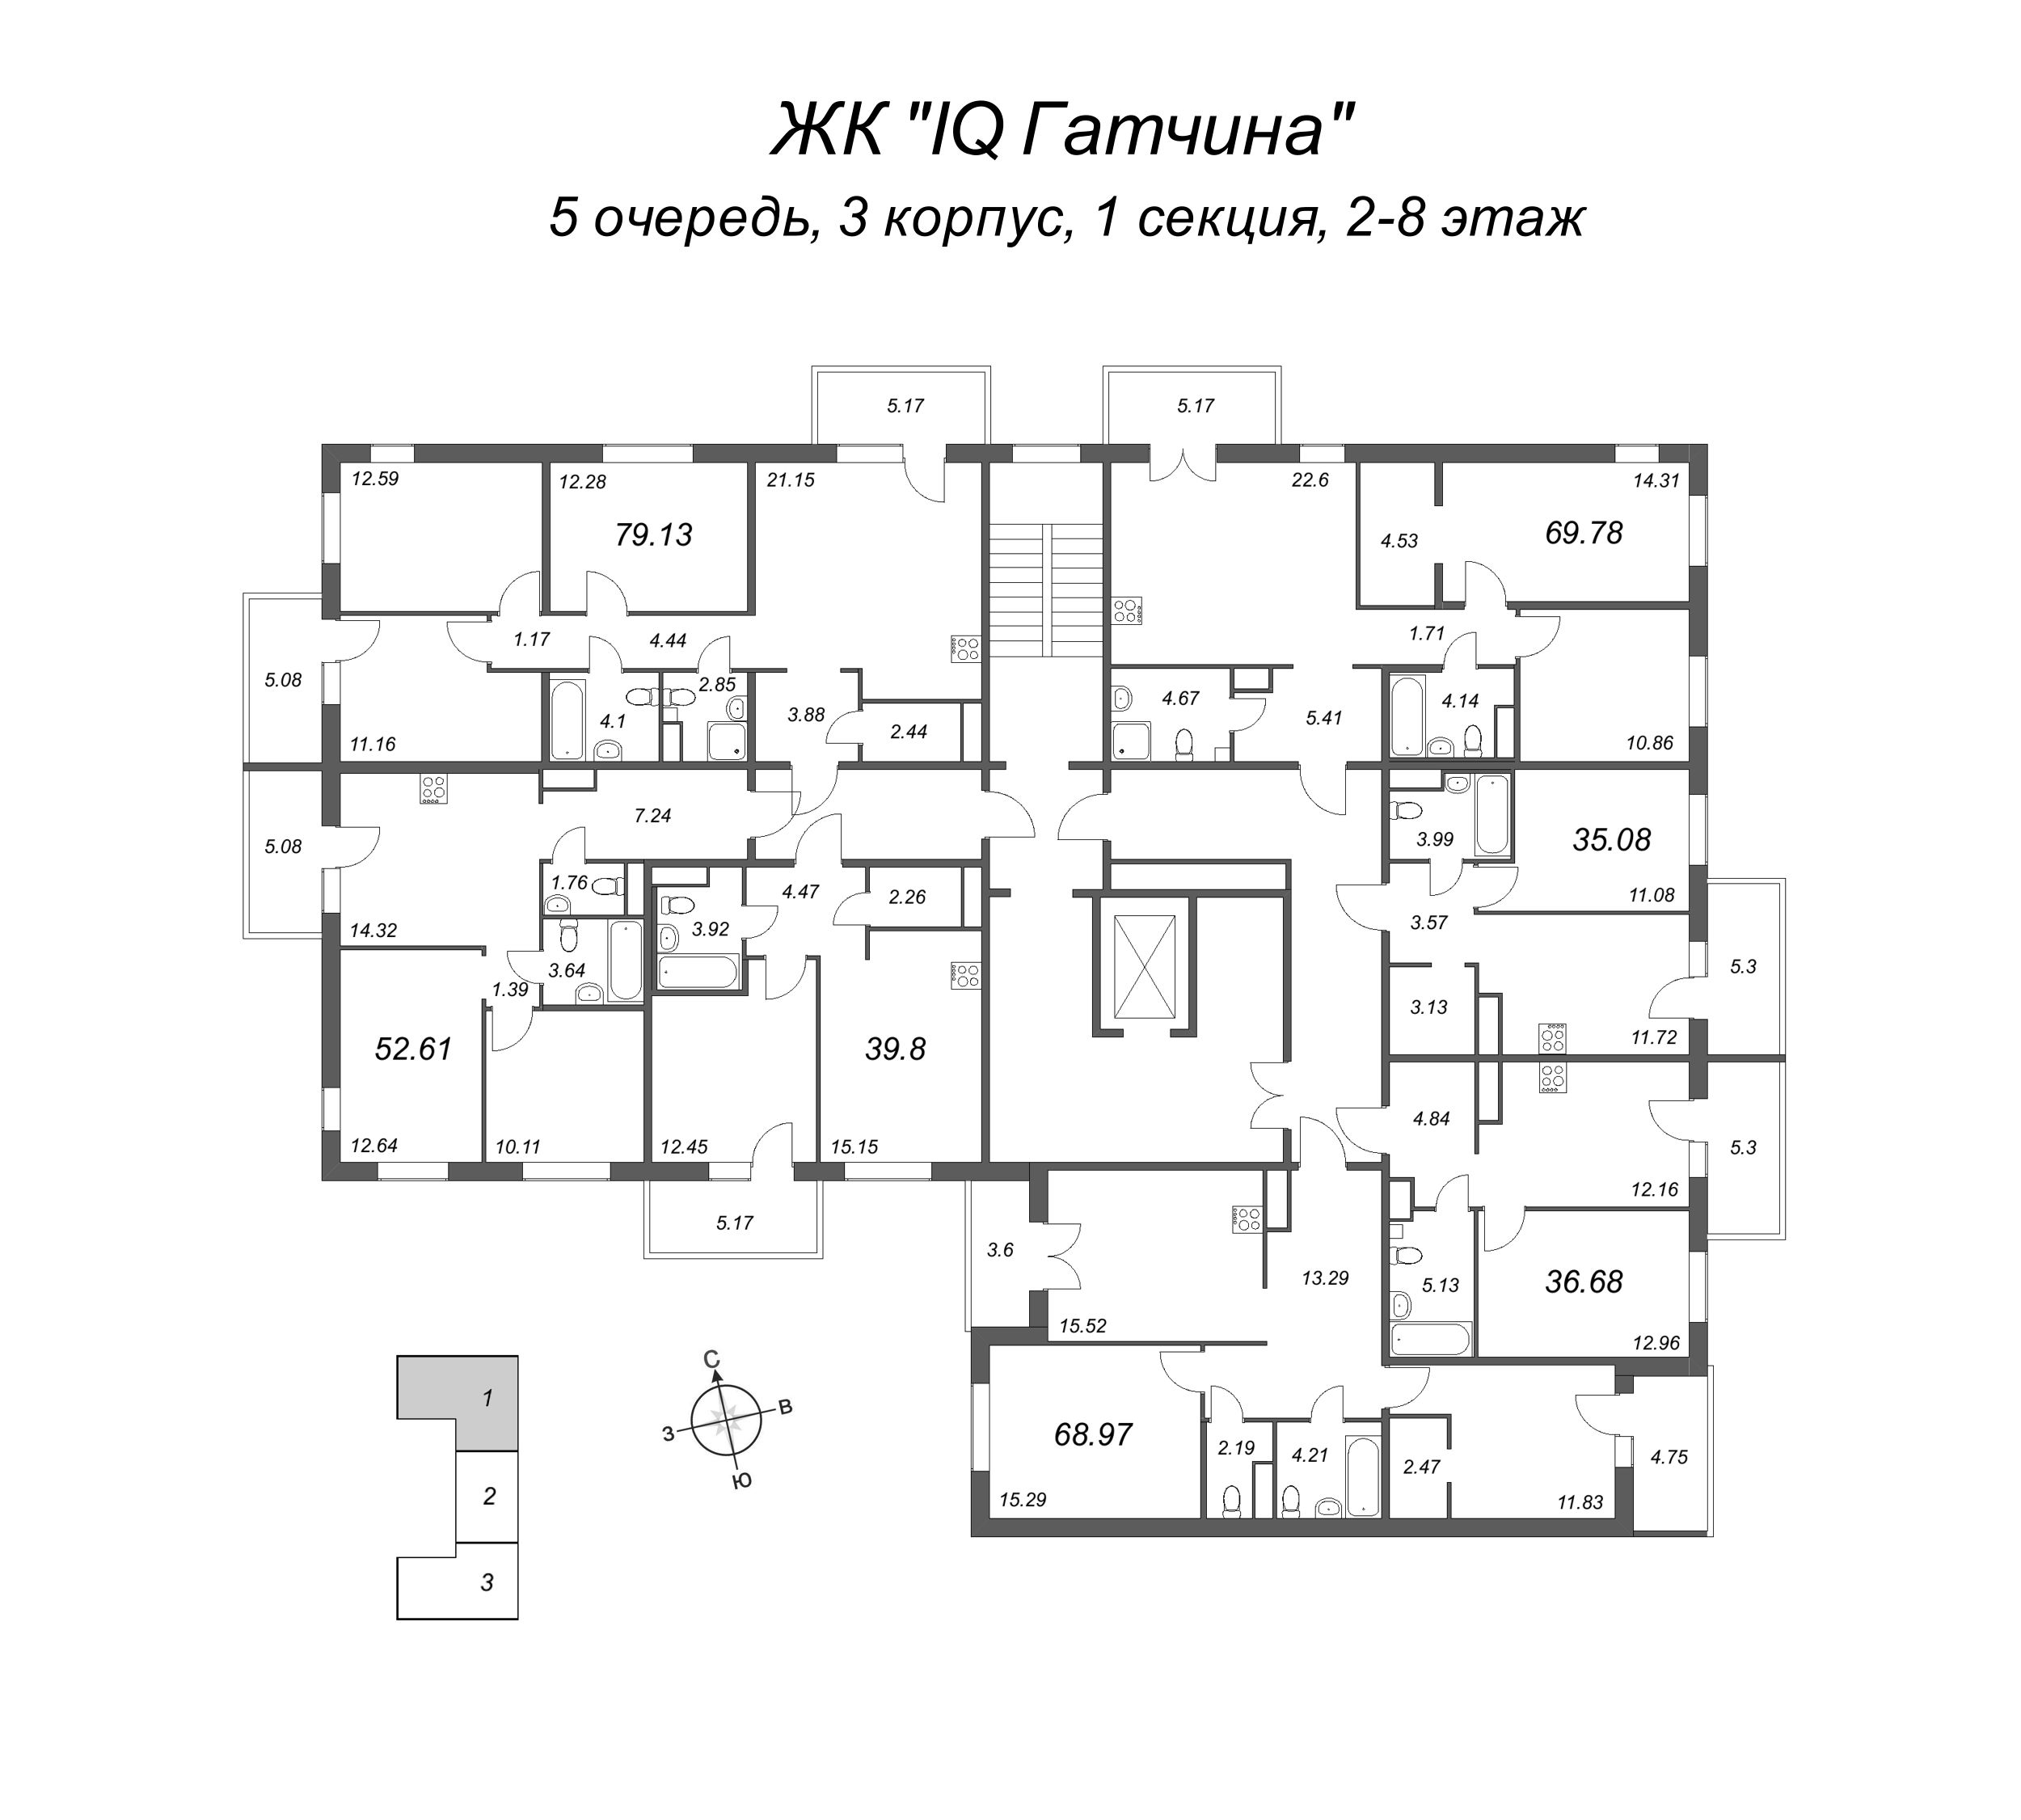 3-комнатная (Евро) квартира, 69.88 м² - планировка этажа